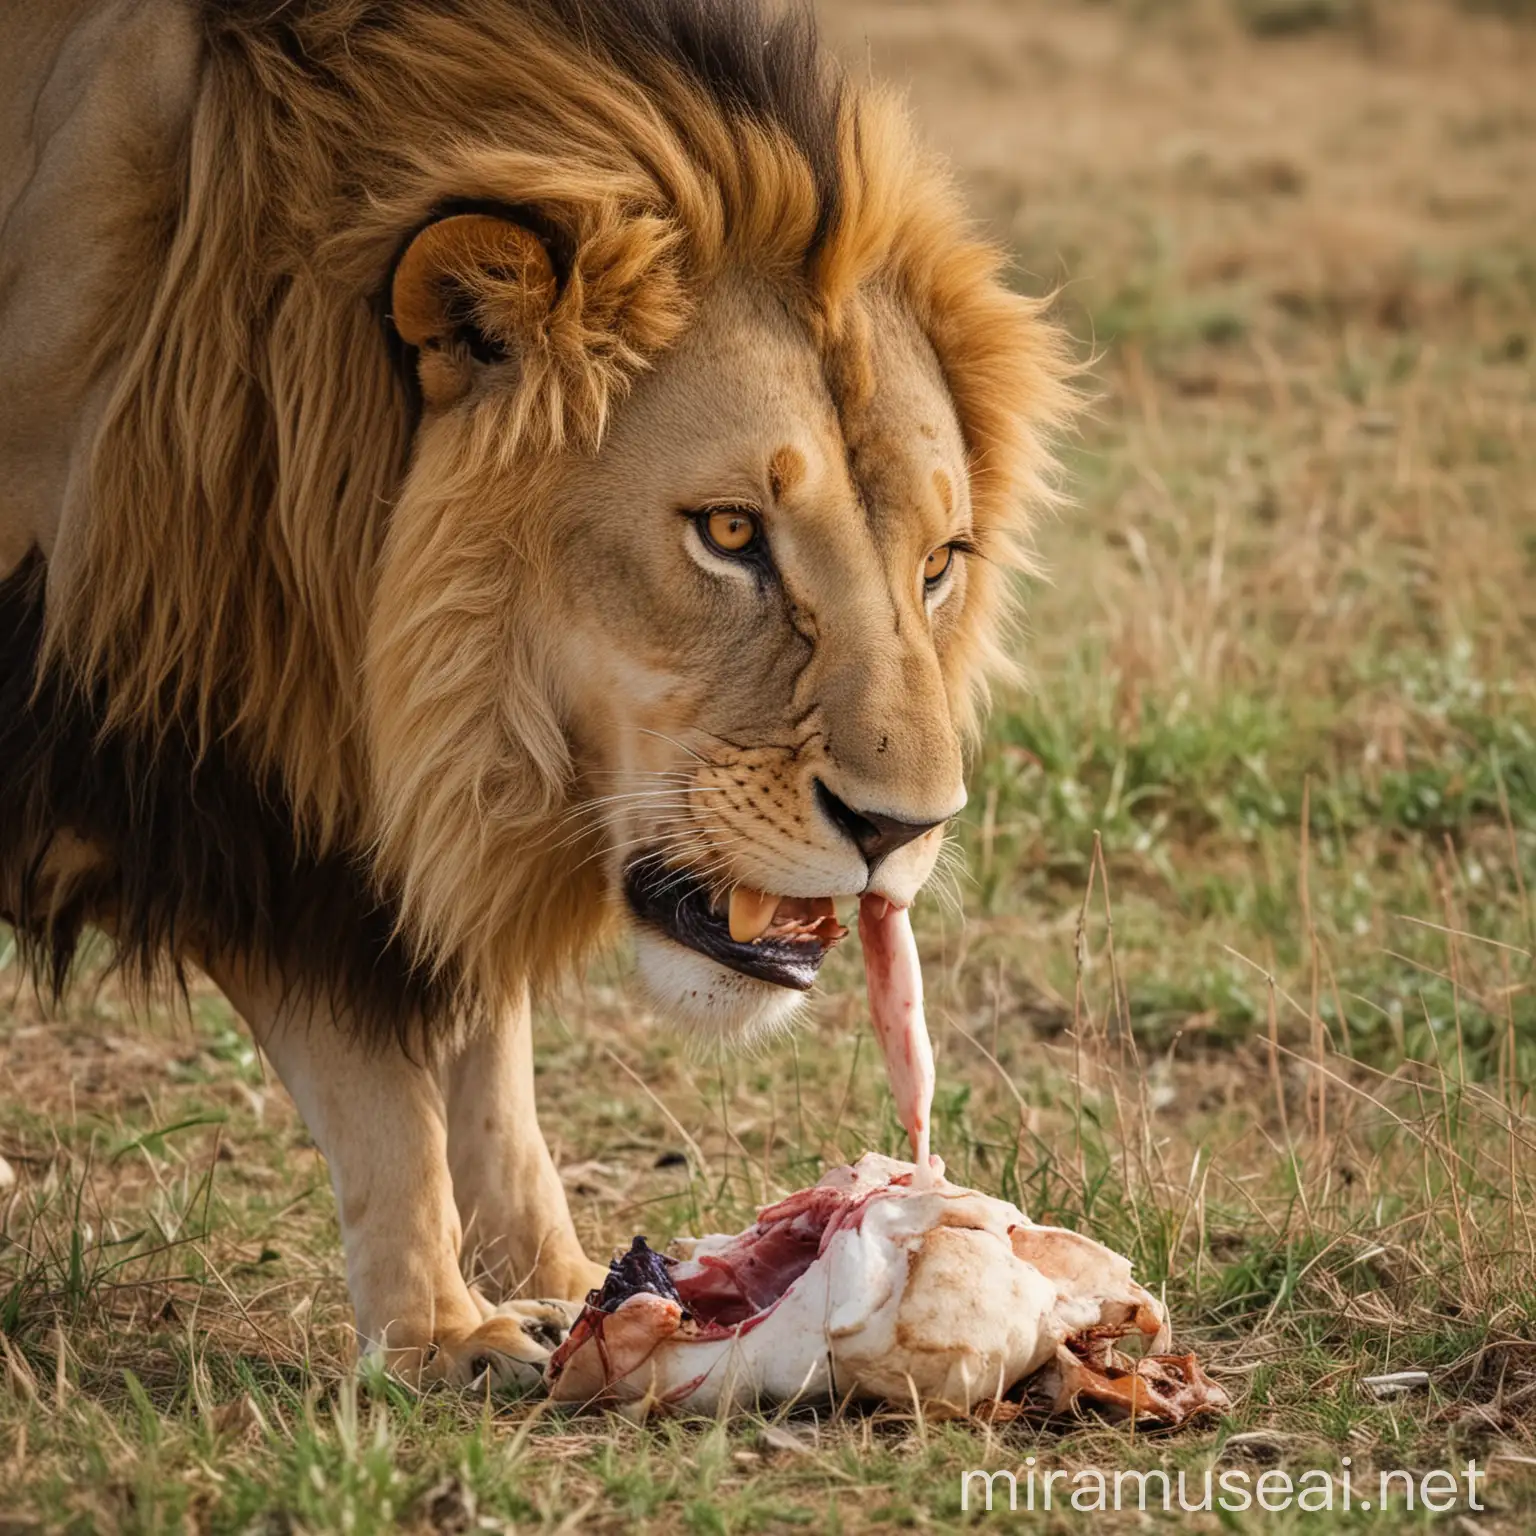 A lion eating prey